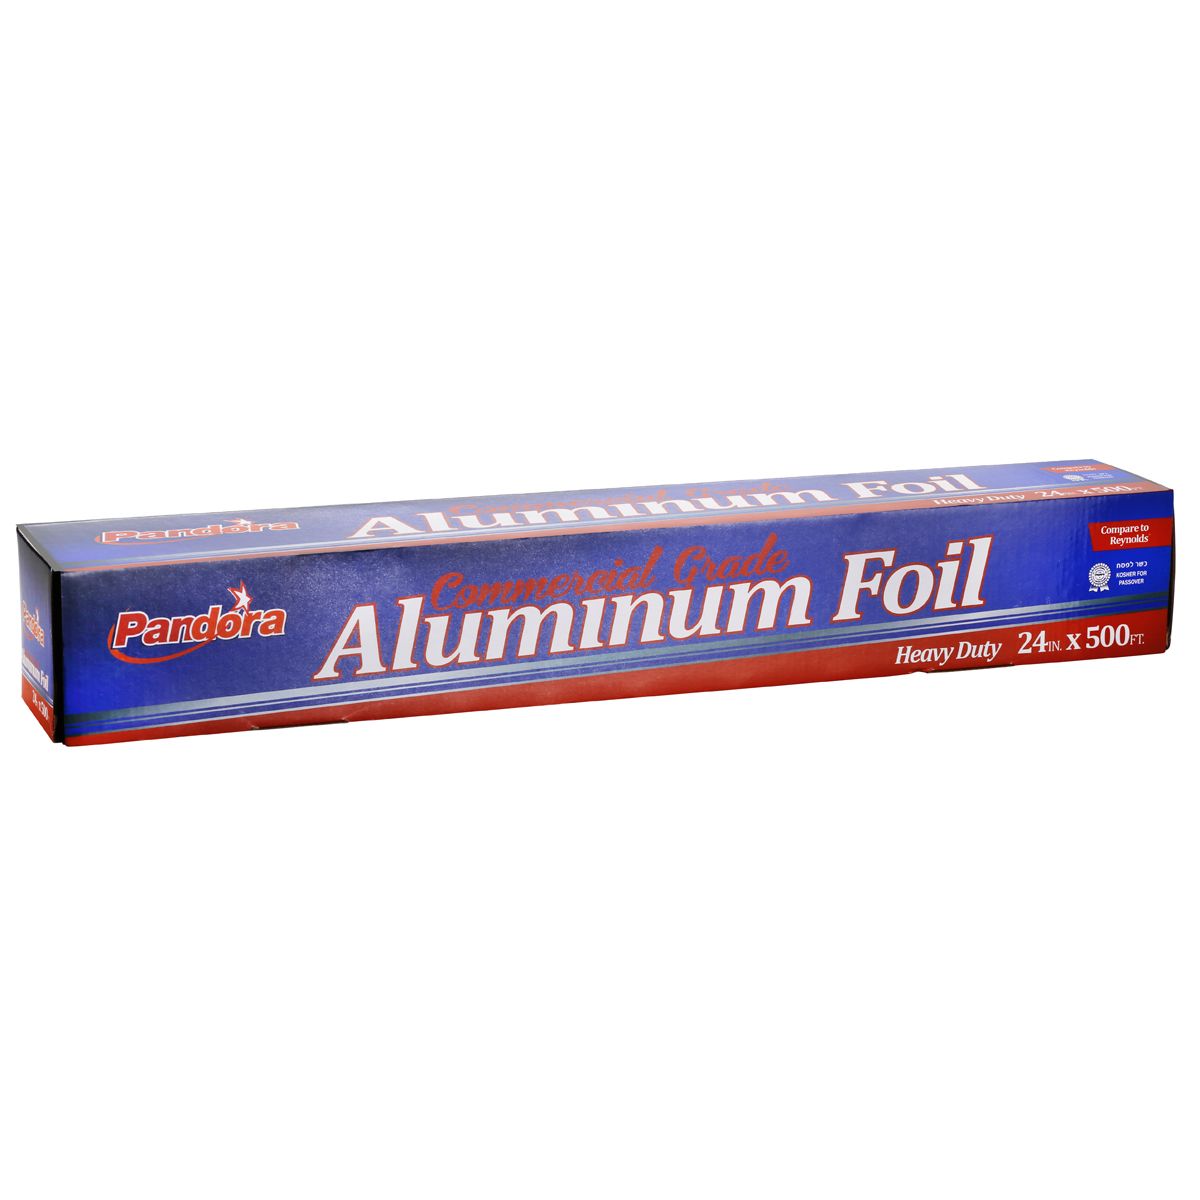 Reynolds Extra Heavy-Duty Aluminum Foil Roll, 18 x 500 ft, Silver